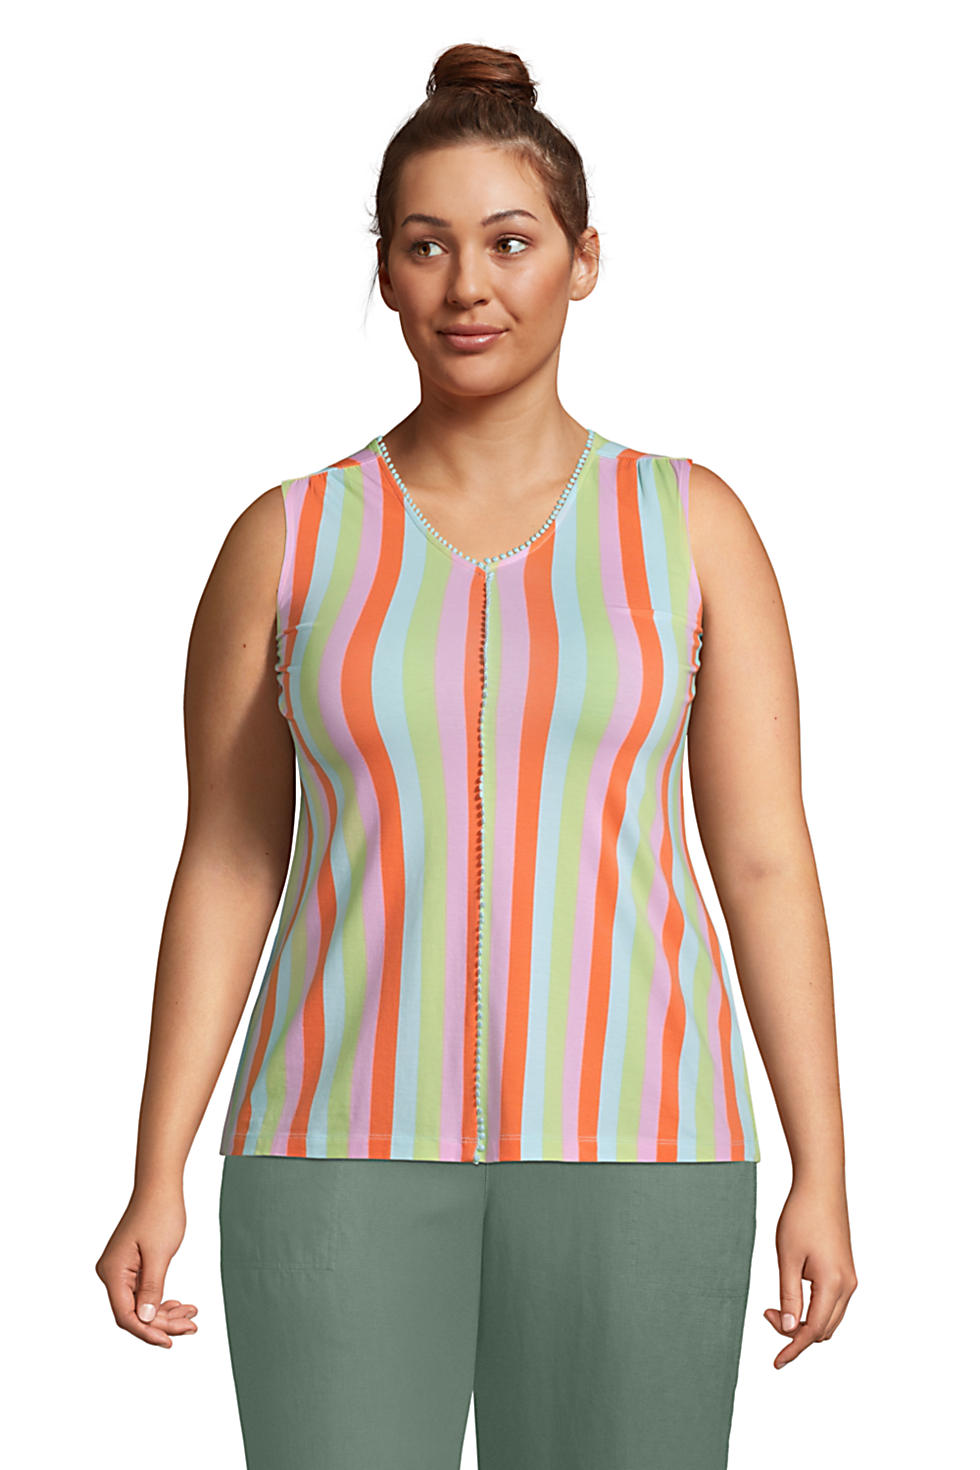 Lands End Women's Plus Size Light Weight Trimmed Tank Top (Papaya Orange Multi Stripes)